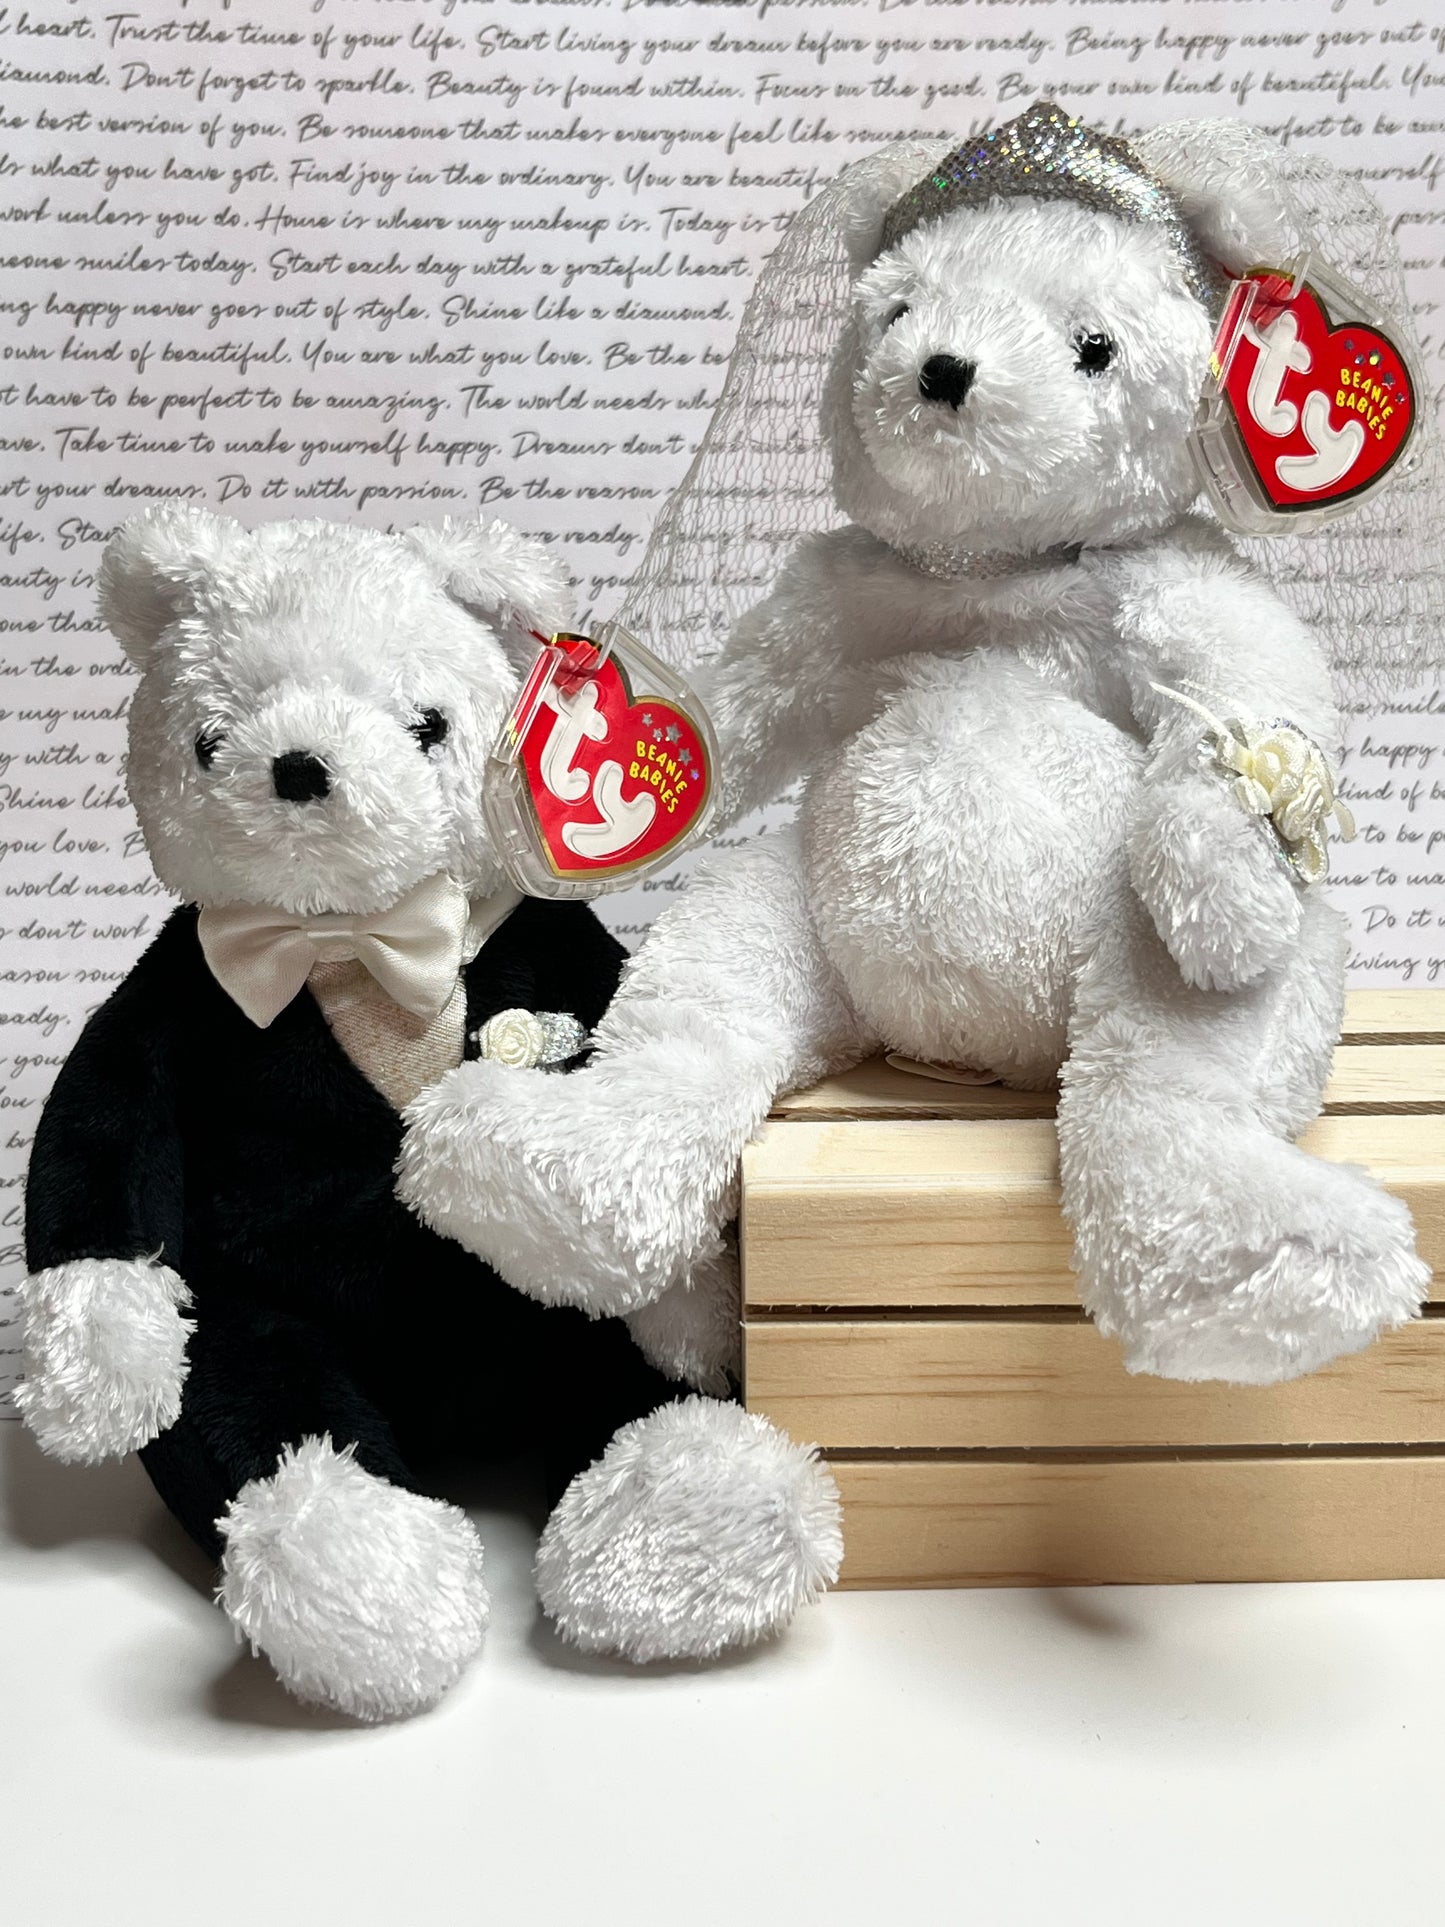 TY Beanie Babies “Bride” & “Groom” The Bears, May 1 2002